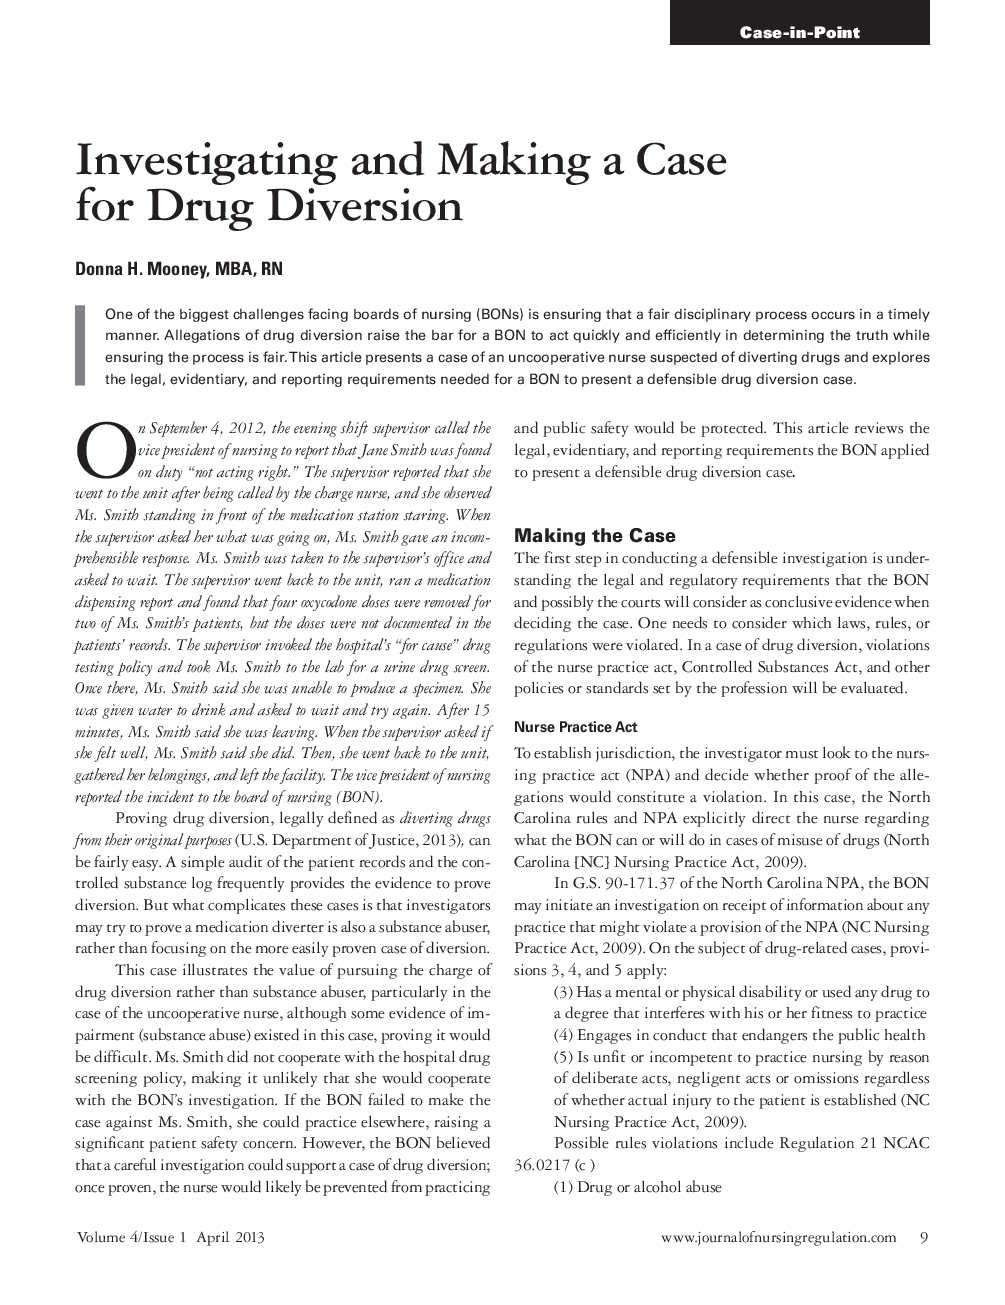 Investigating and Making a Case for Drug Diversion